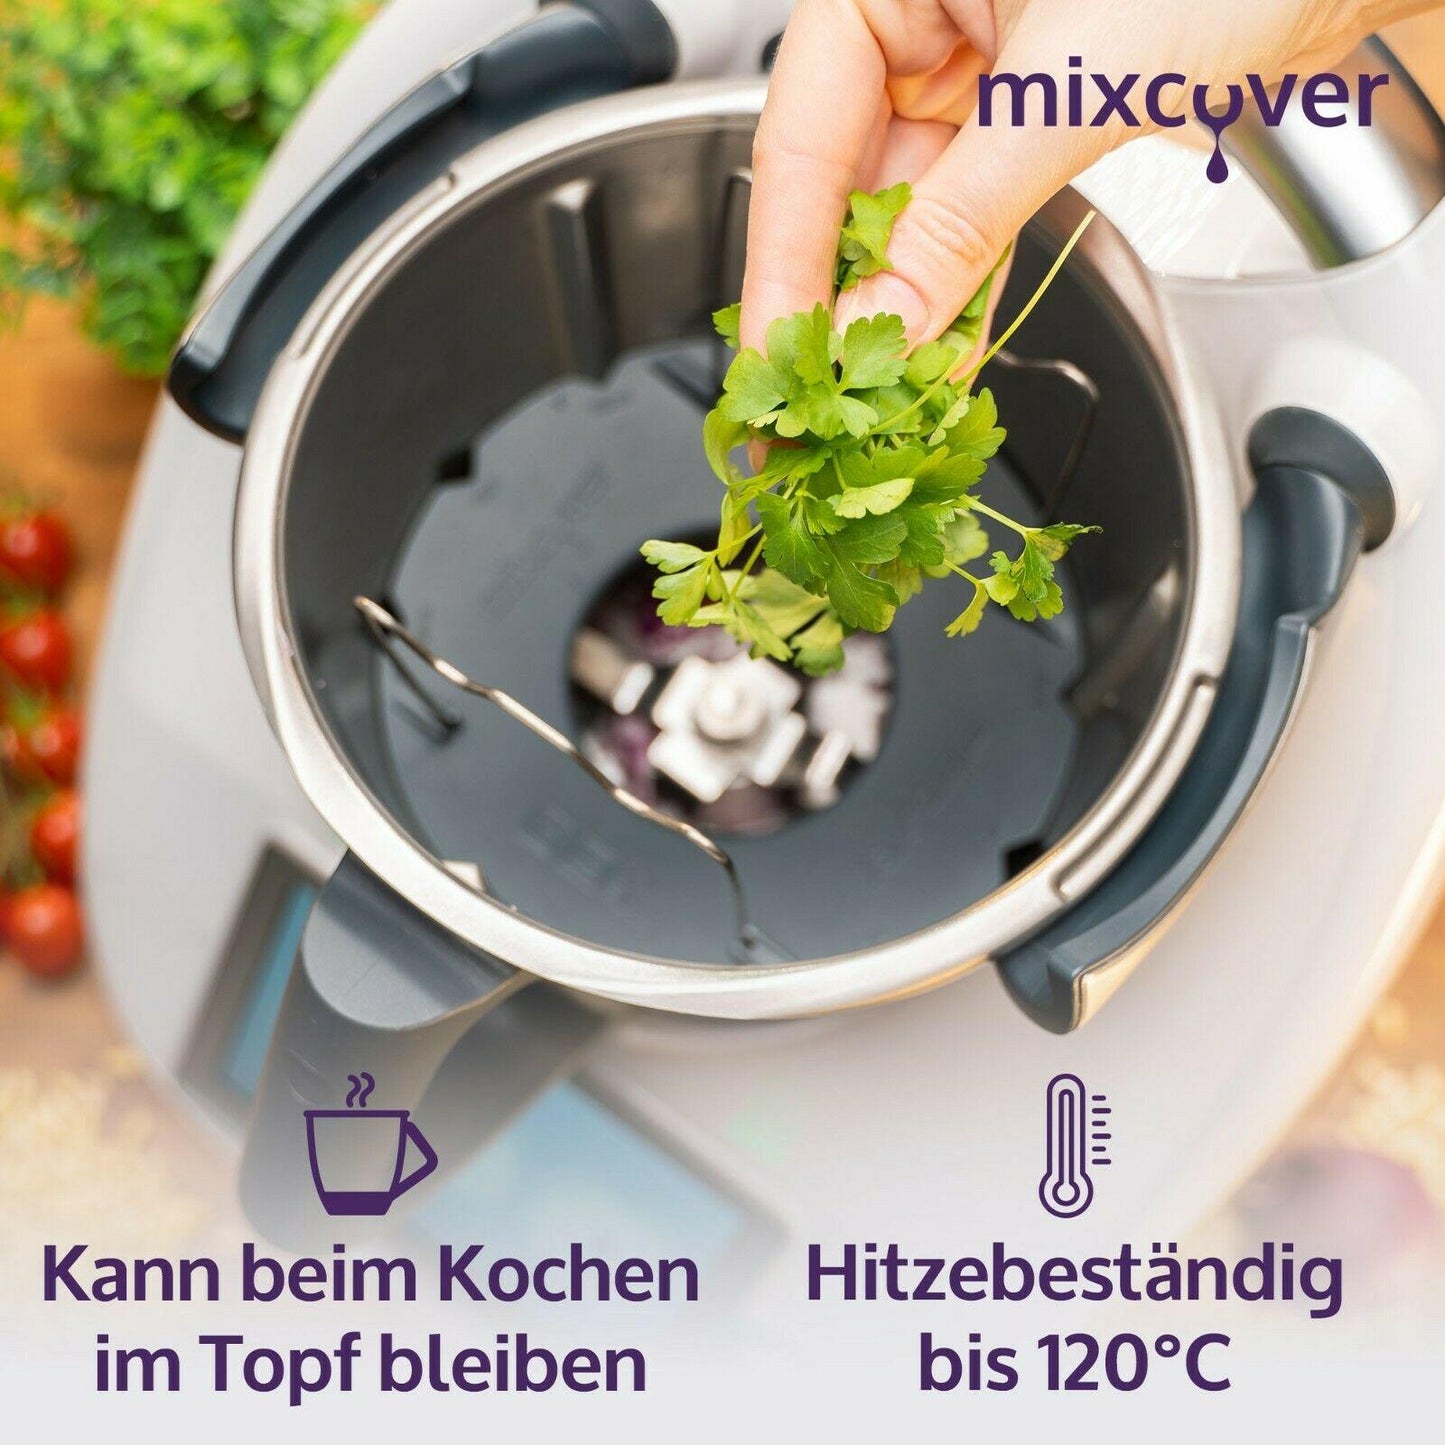 mixcover Mixtopf Verkleinerung für Thermomix TM6 TM5 Häcksel Helfer, Pürieren - Mixcover - Mixcover